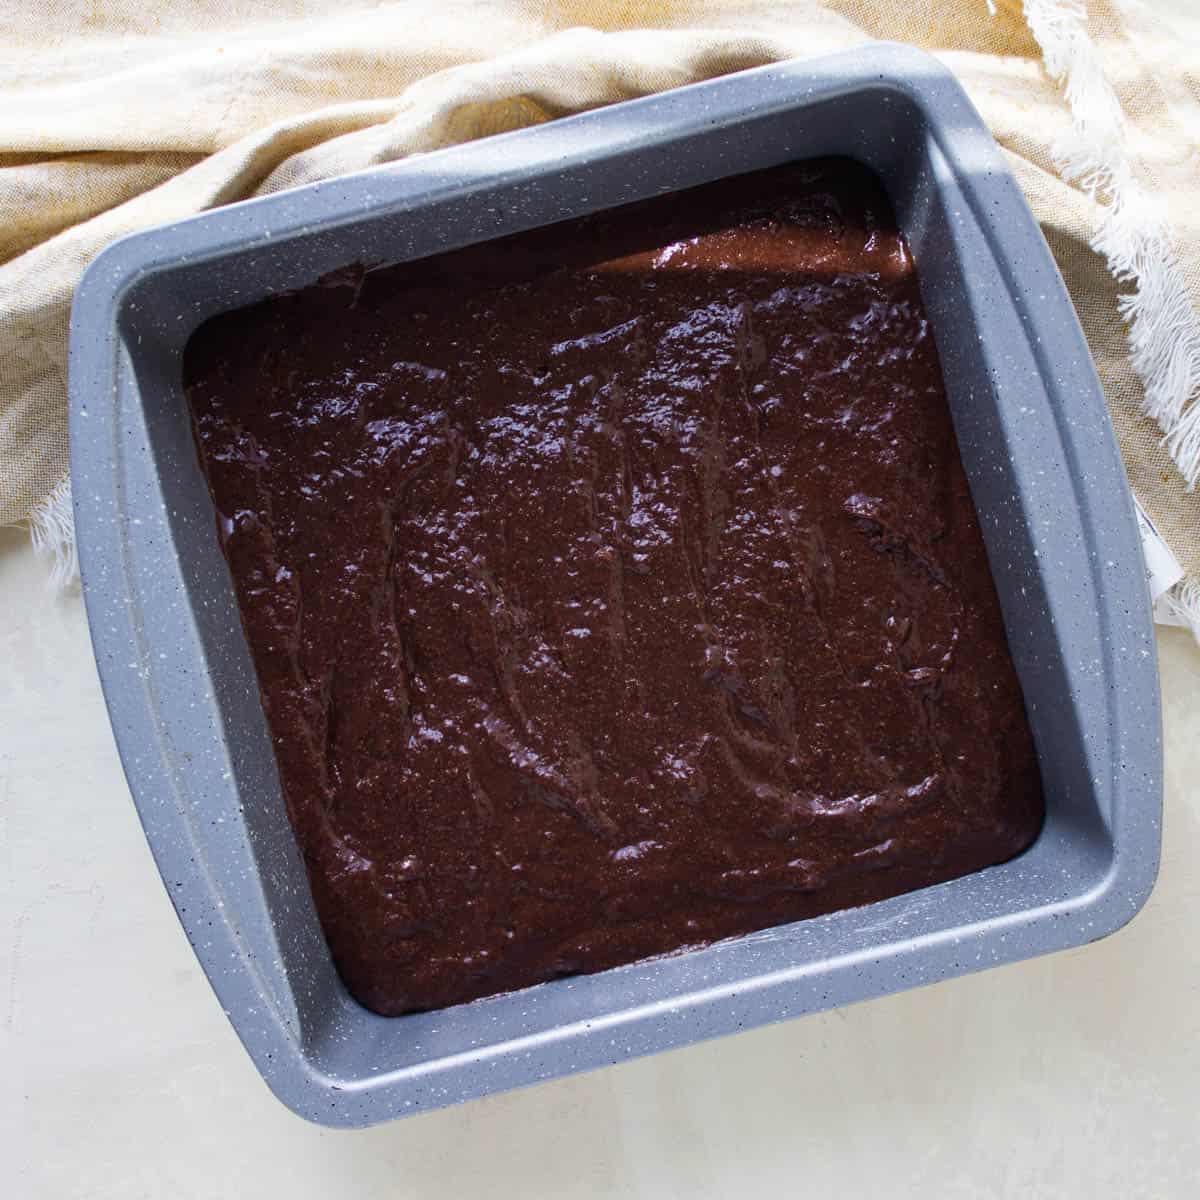 Chocolate banana cake batter in a square cake pan.